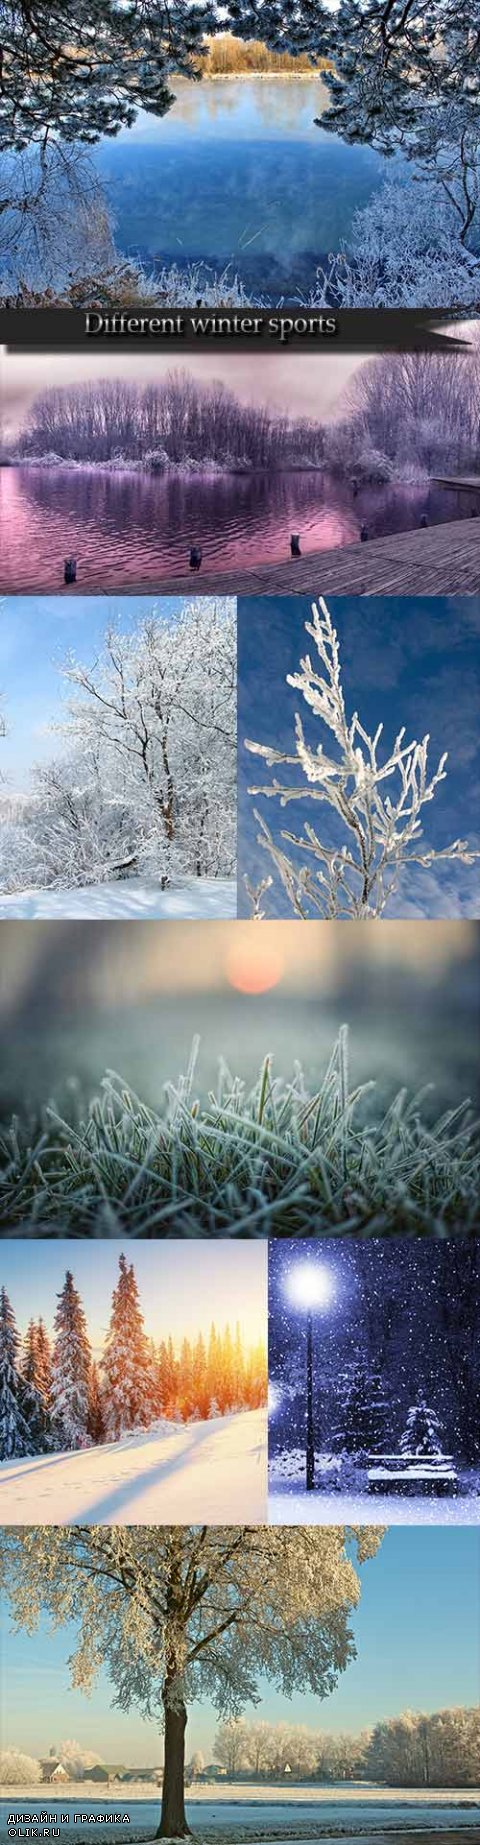 Stunning winter landscapes